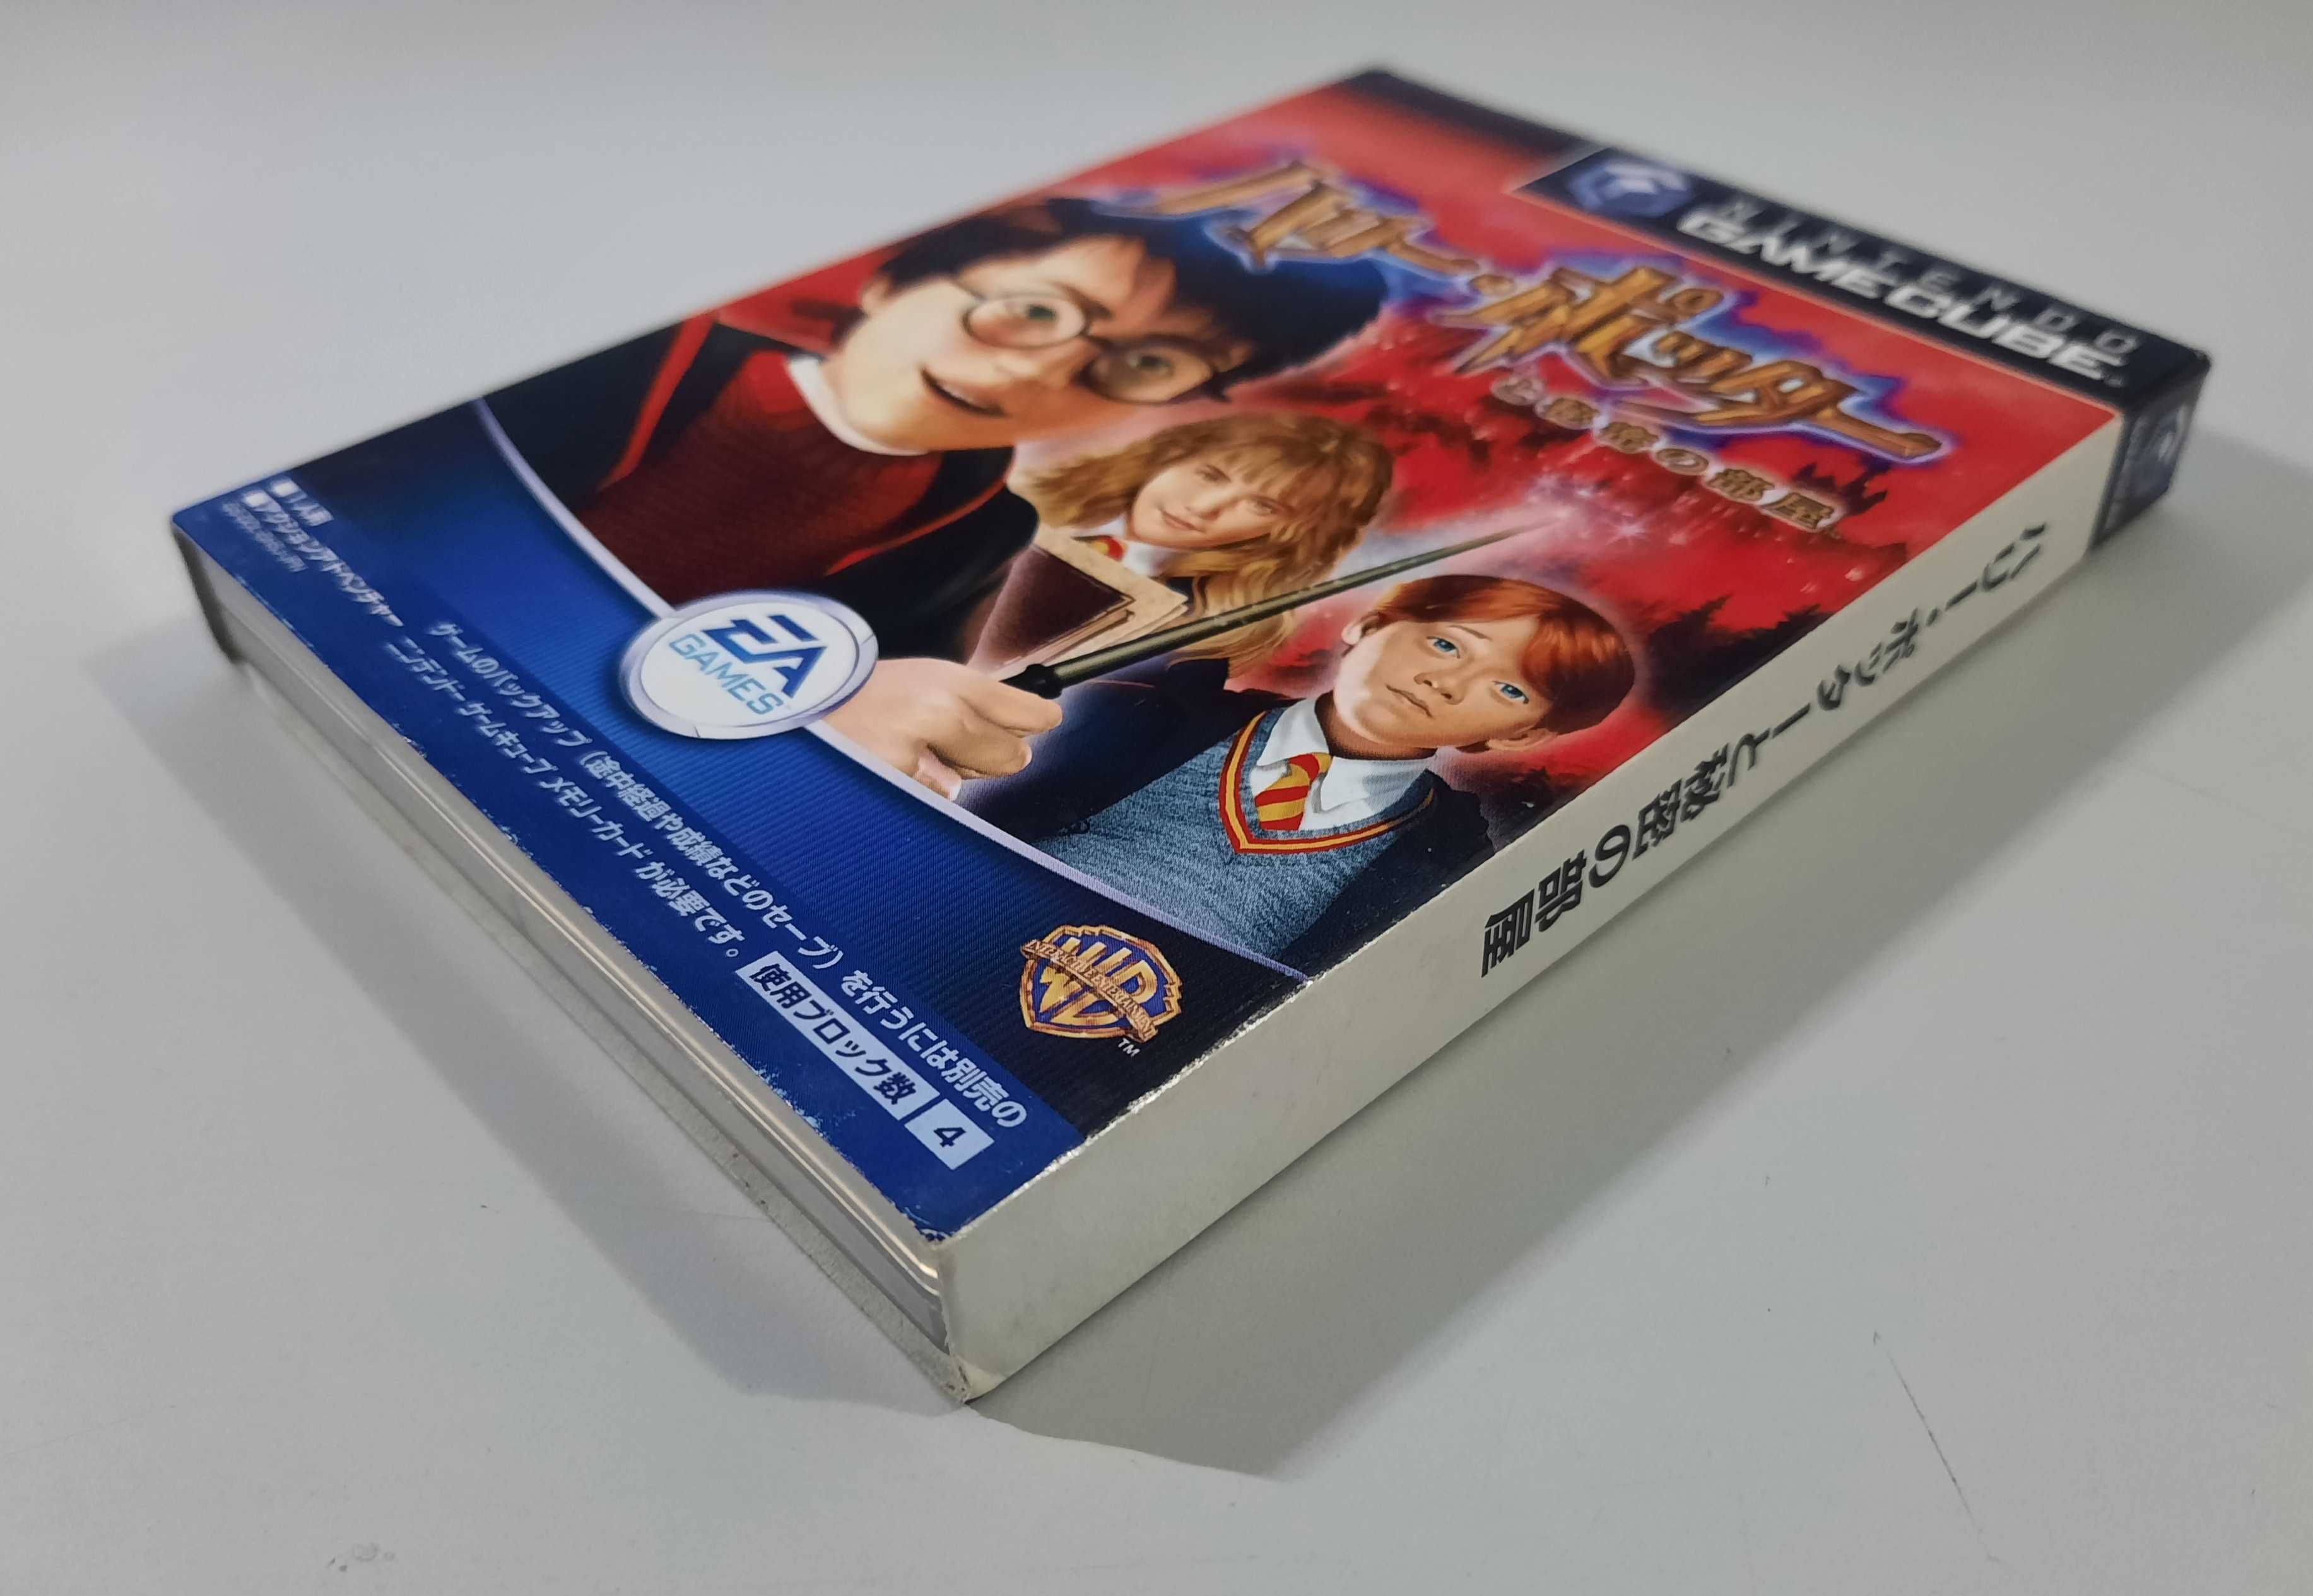 Harry Potter to Himitsu no Heya / GameCube [NTSC-J]